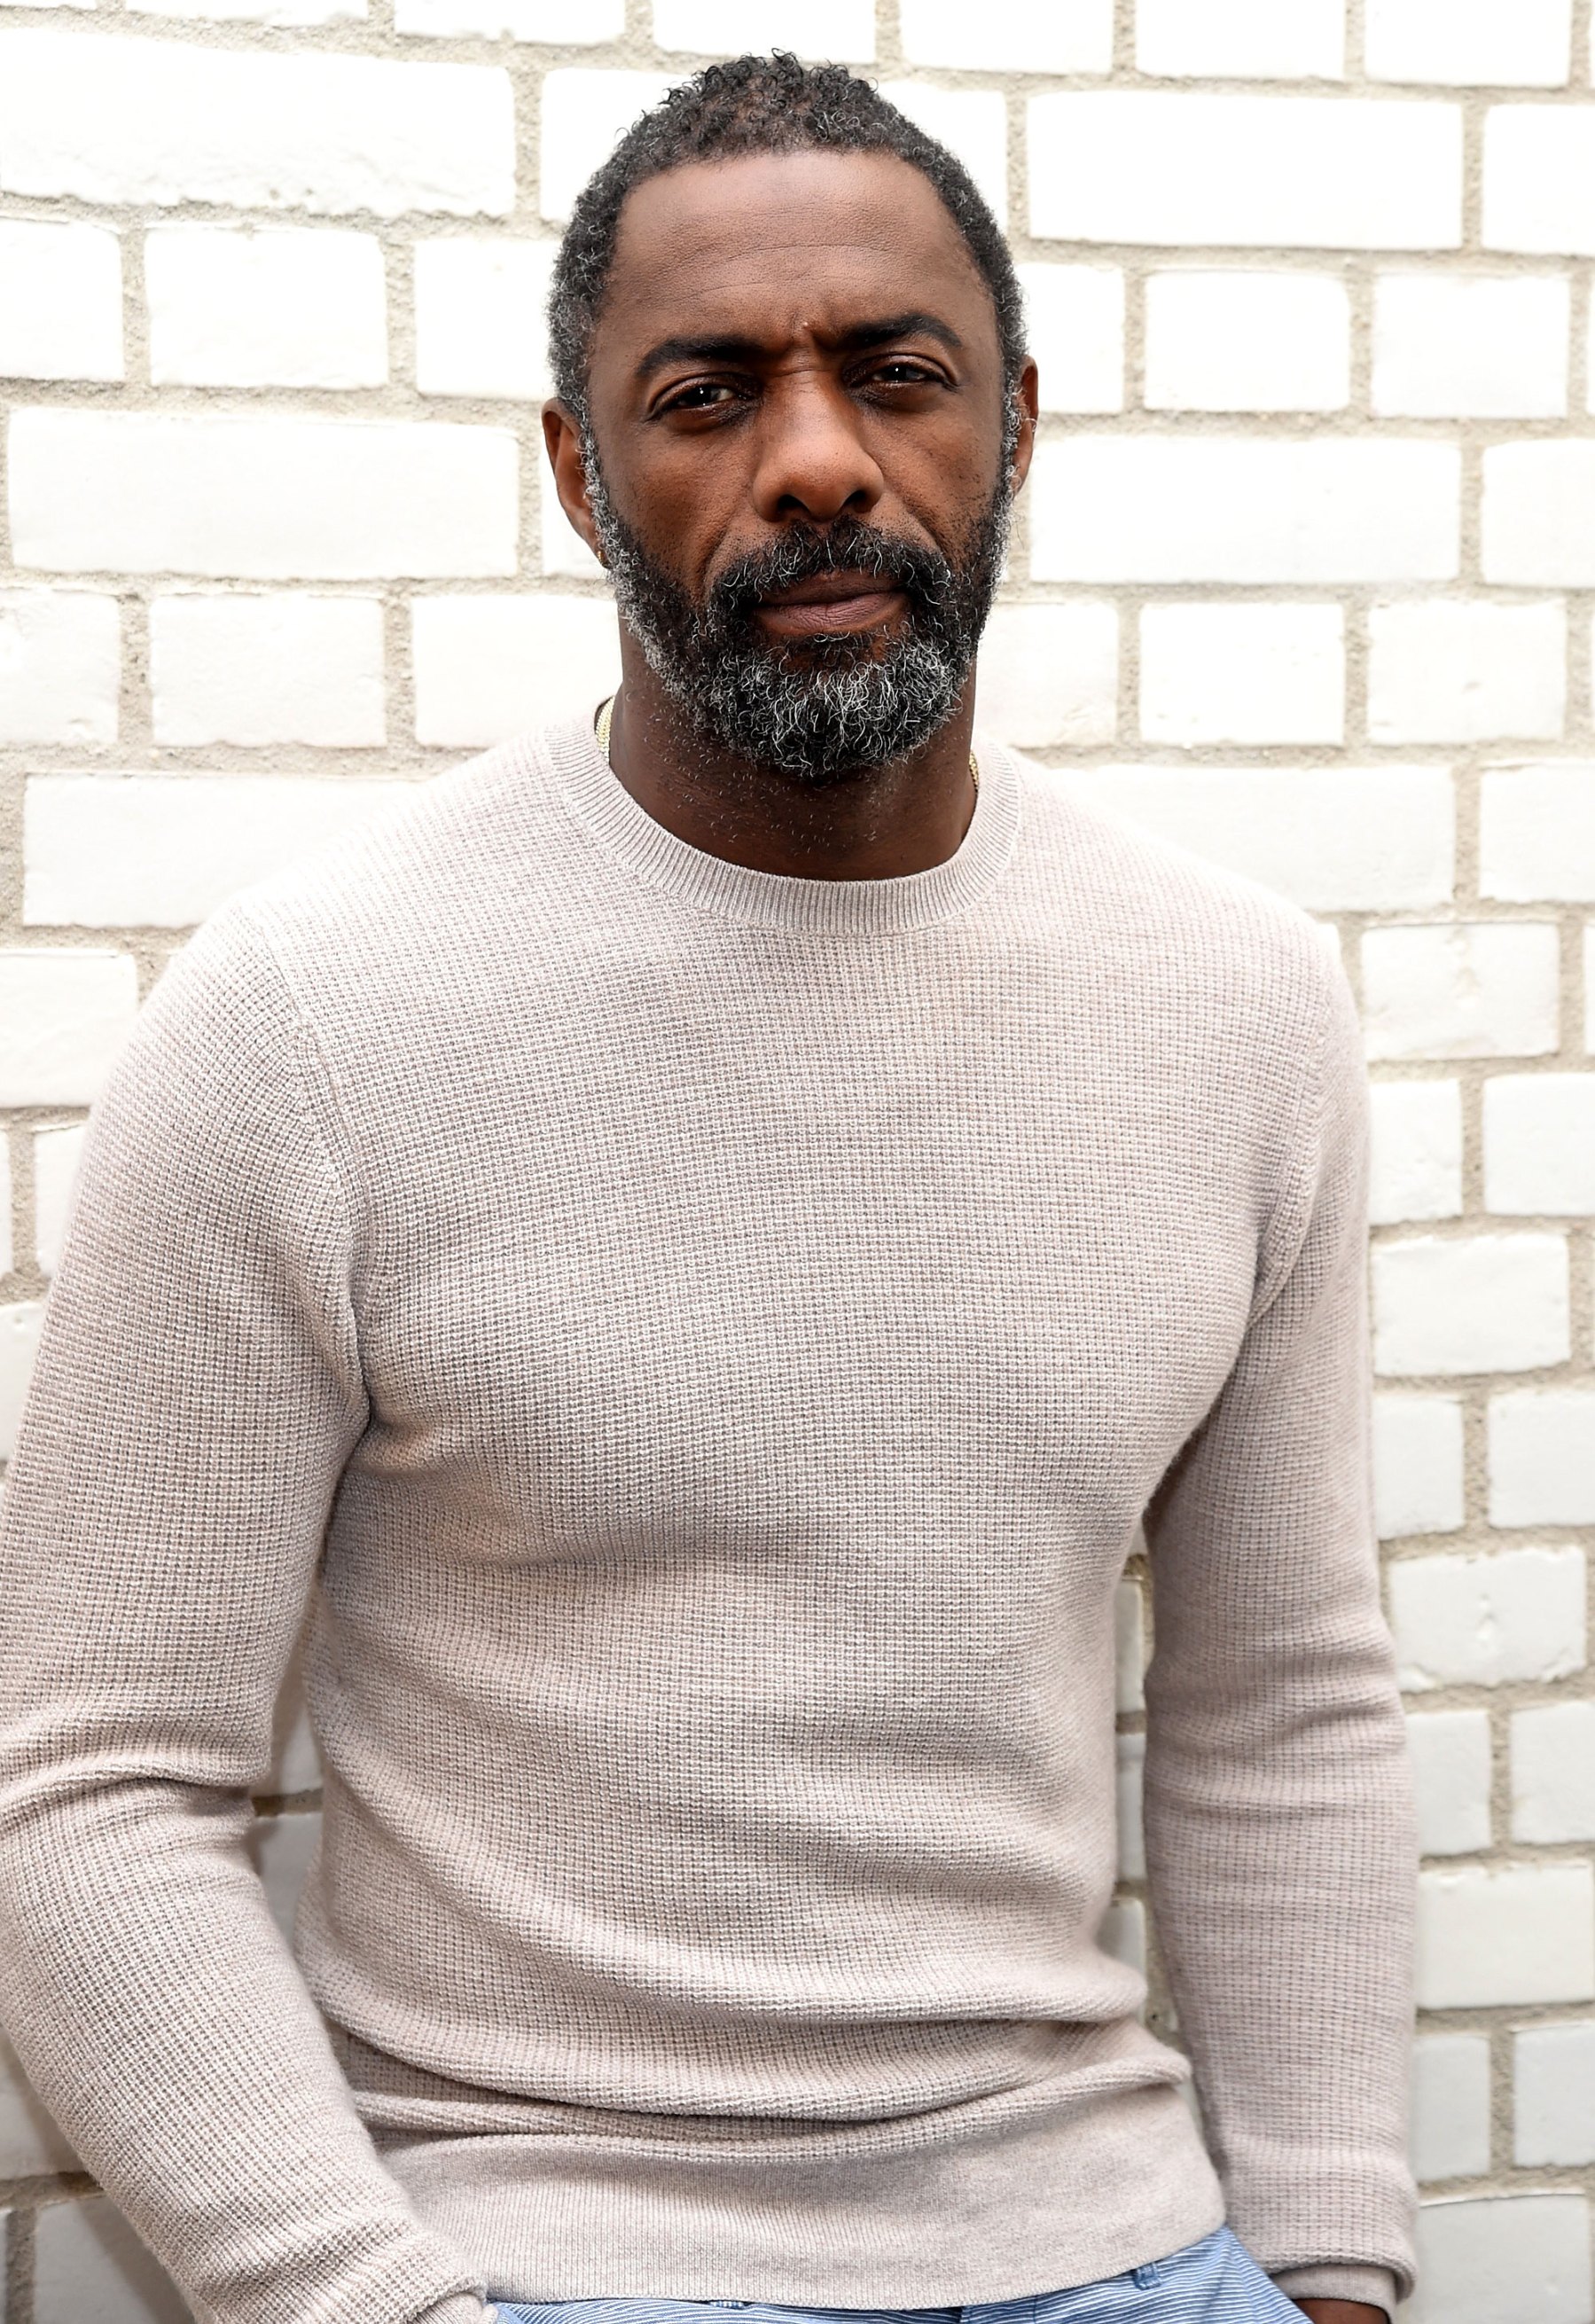 Idris Elba's Best Style That Make Him Fit to Be James Bond